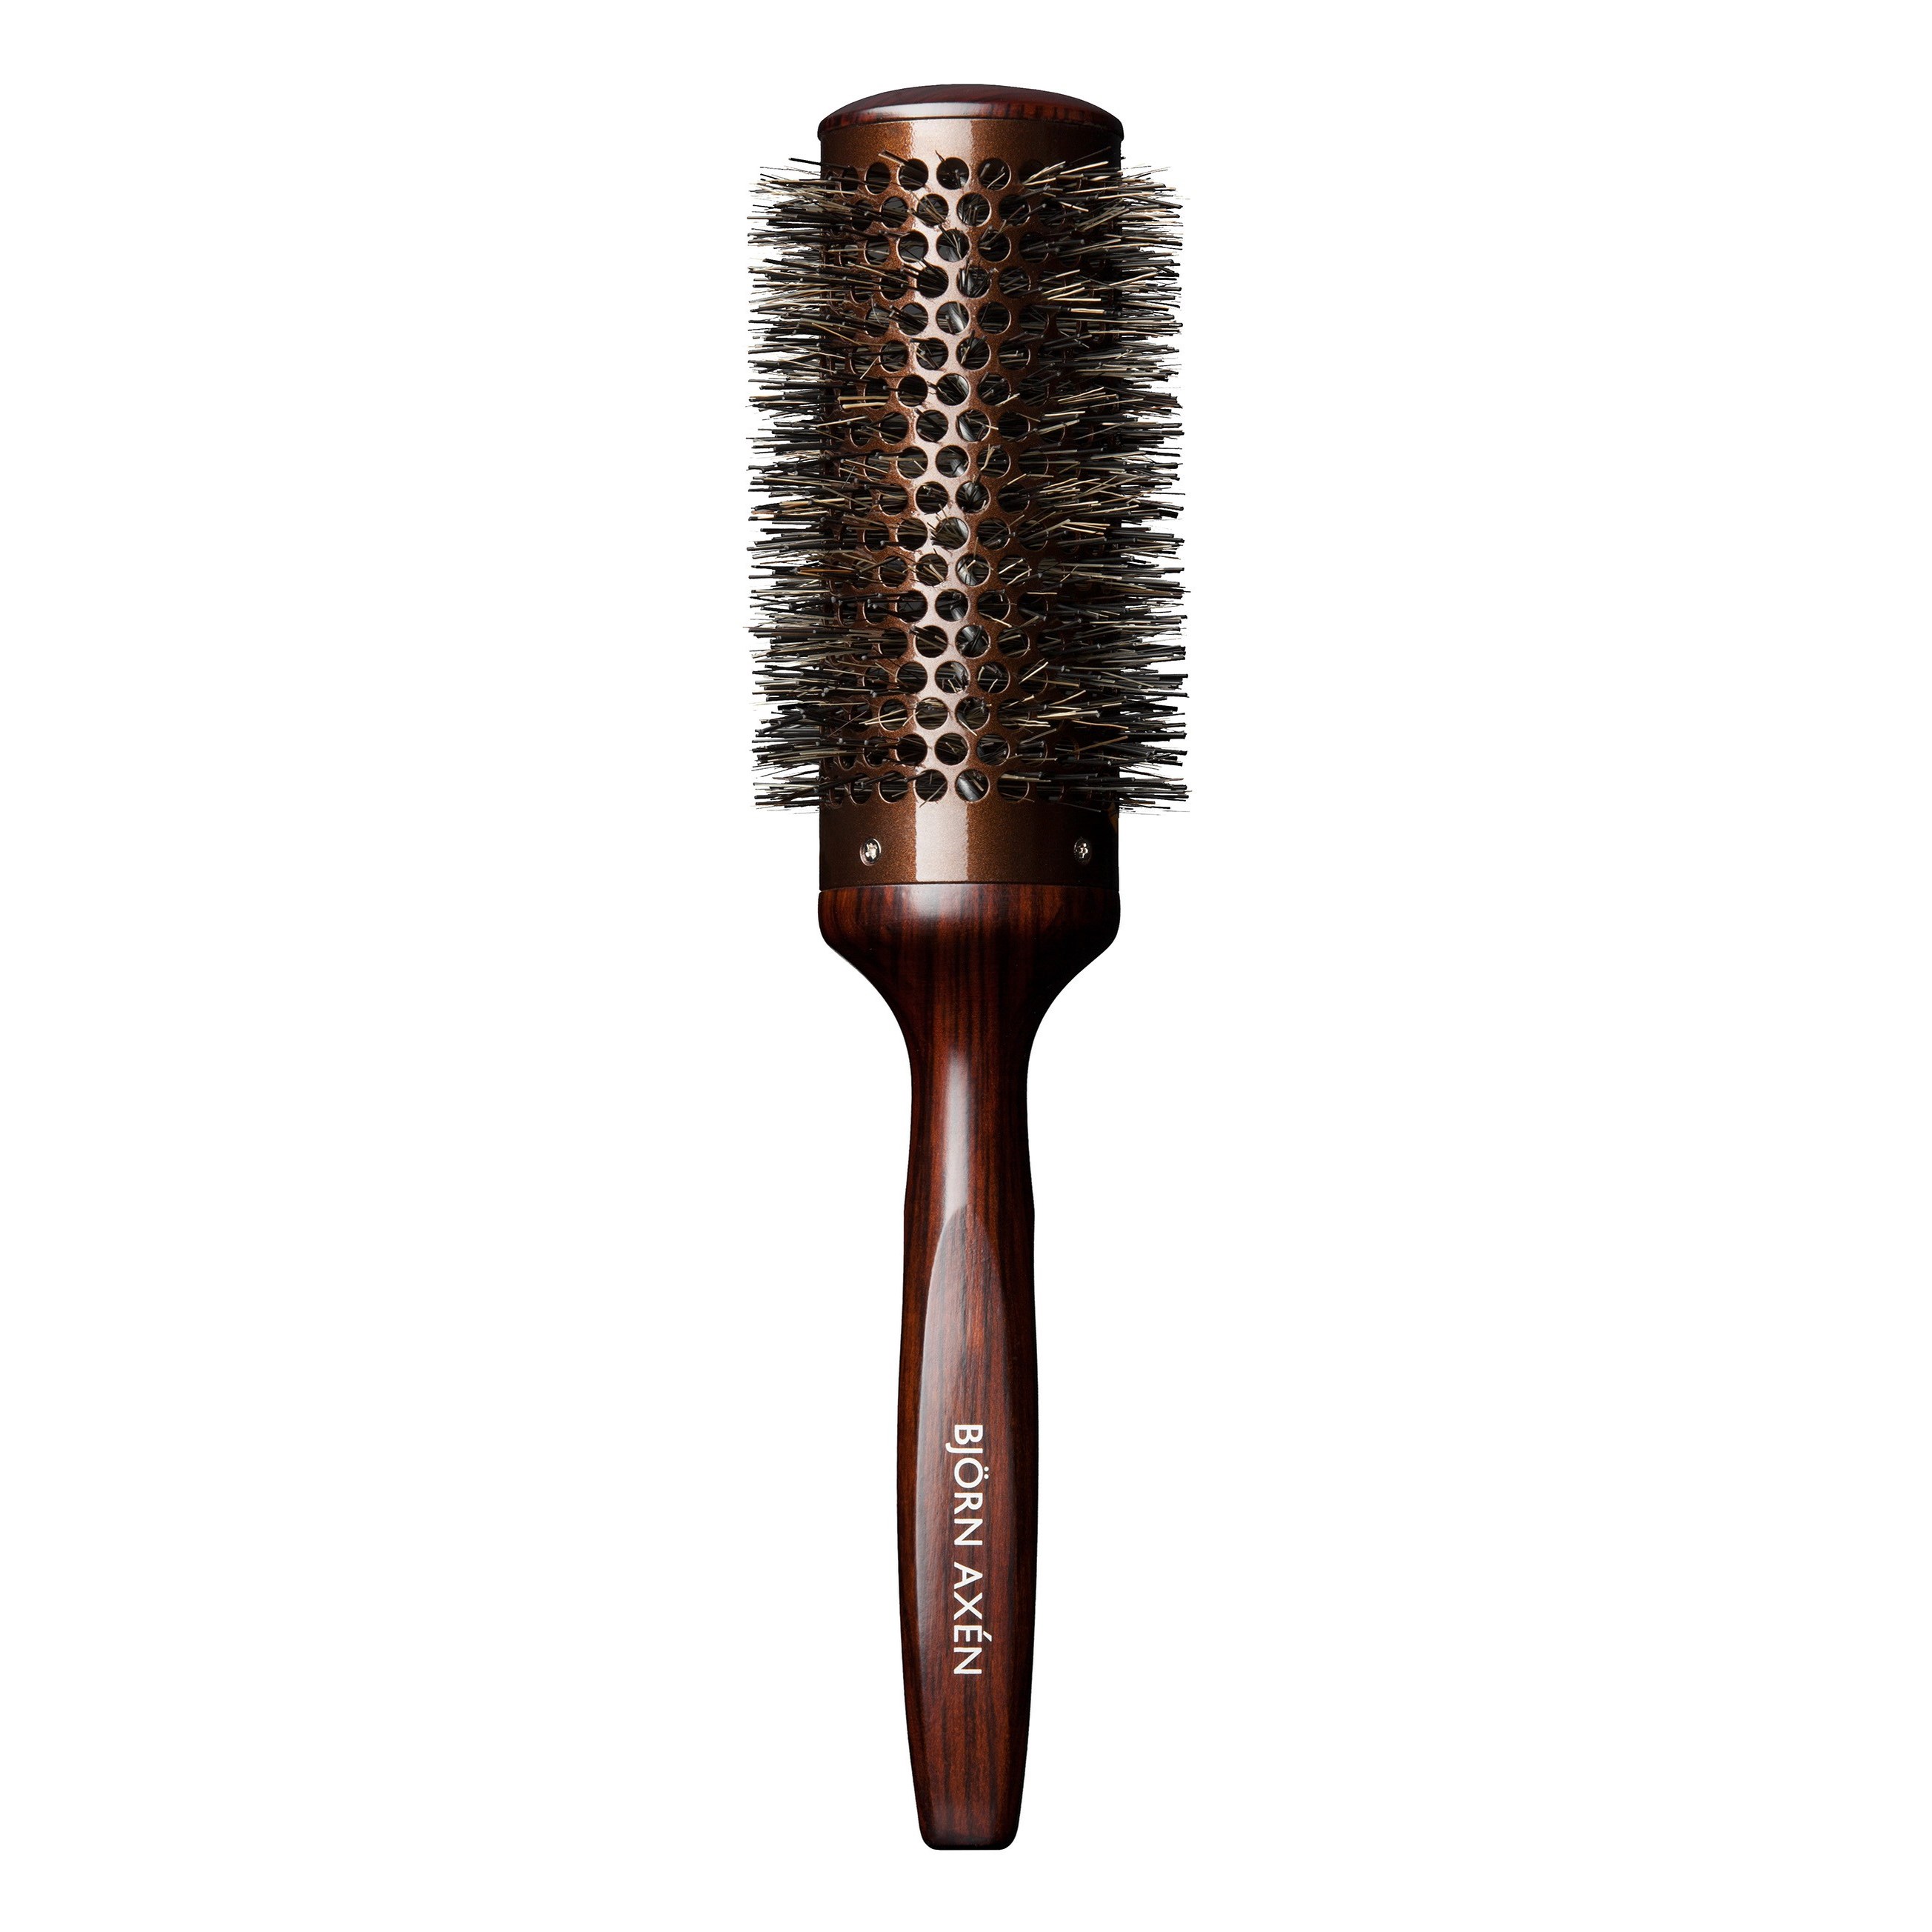 Björn Axen Maple Wood Blowout Brush For Medium To Long Hair